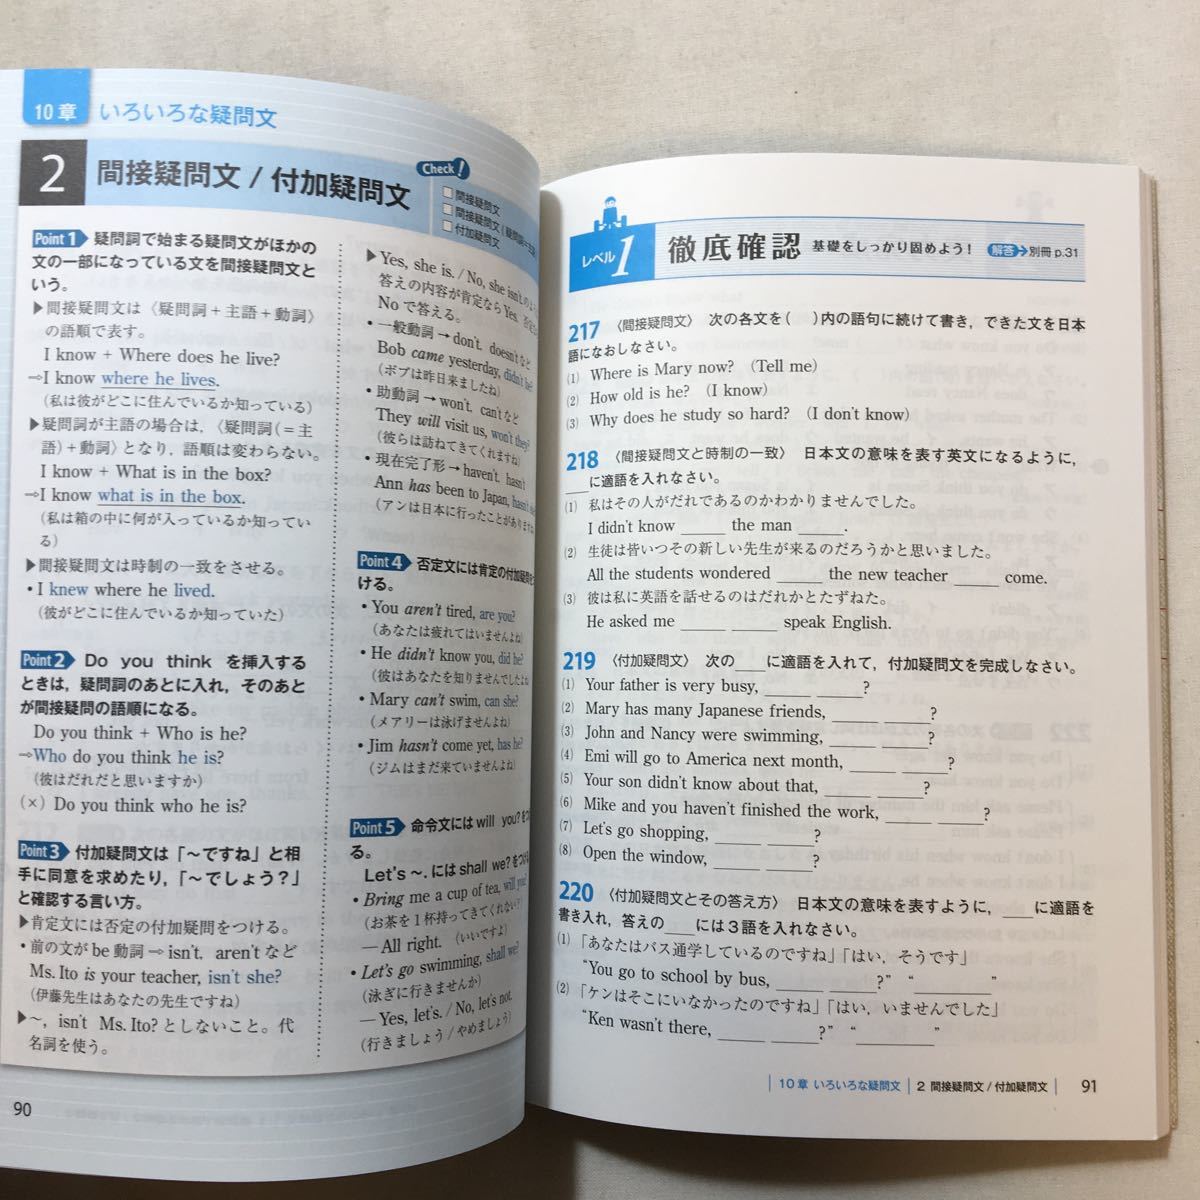 zaa-286♪ハイクラス徹底問題集 中3英語 単行本 2013/3/18 　文 理